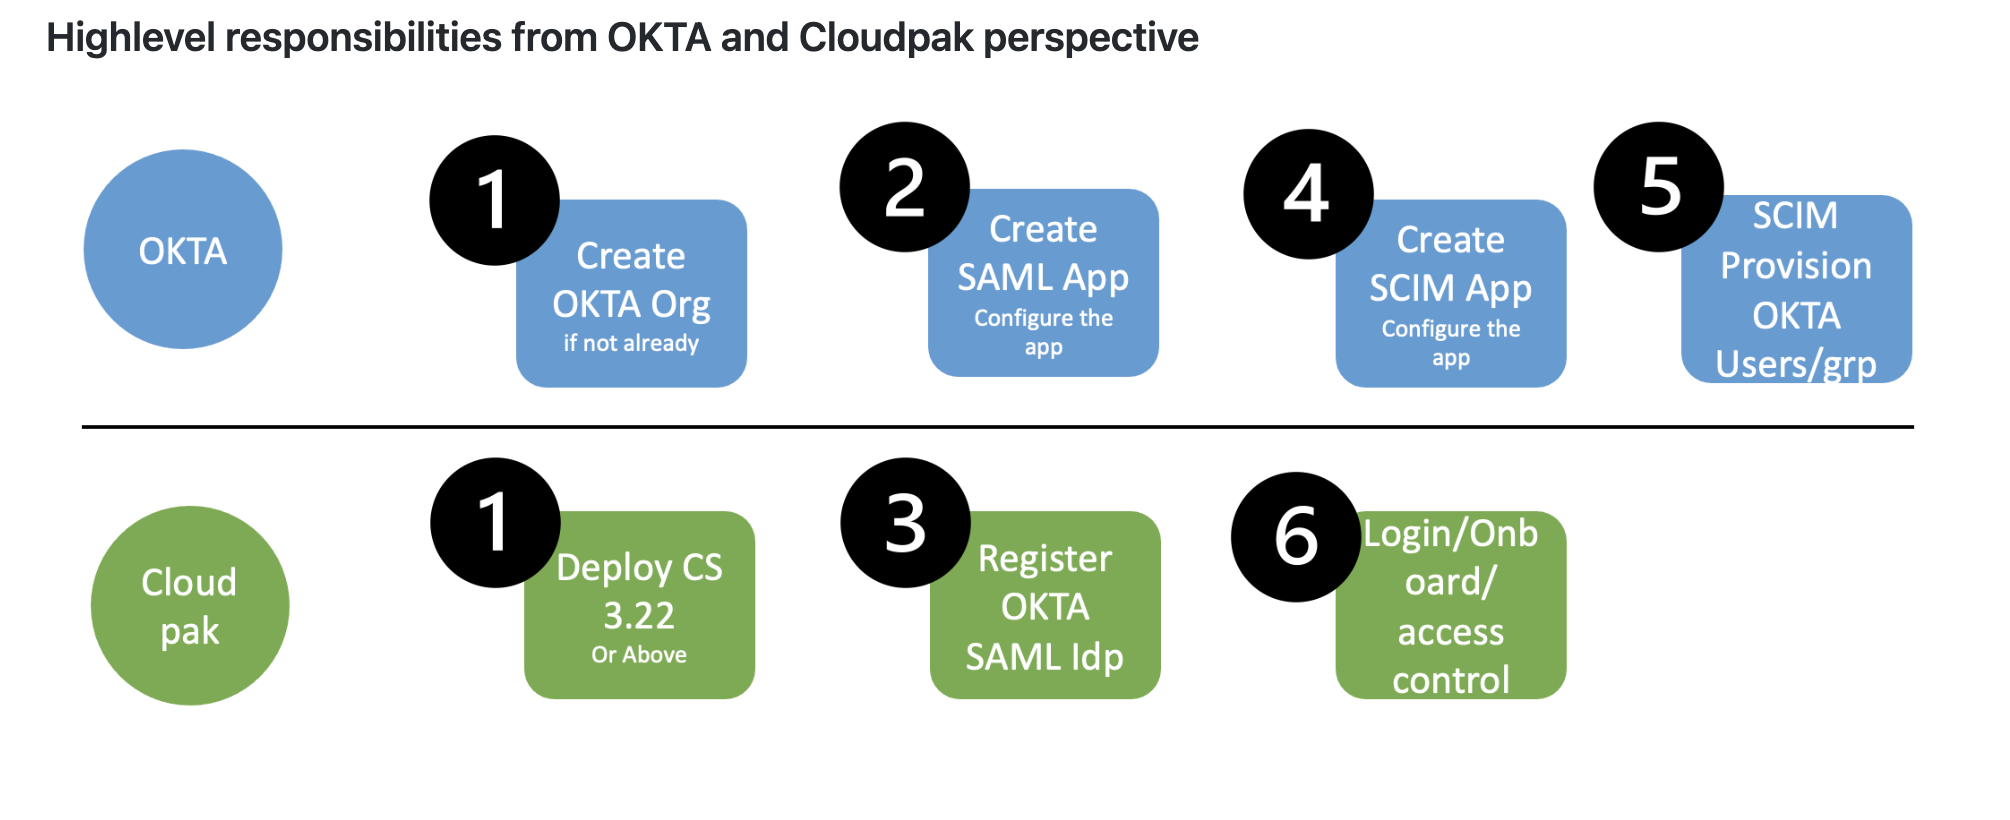 The image displays Okta Cloudpak integration responsibilities